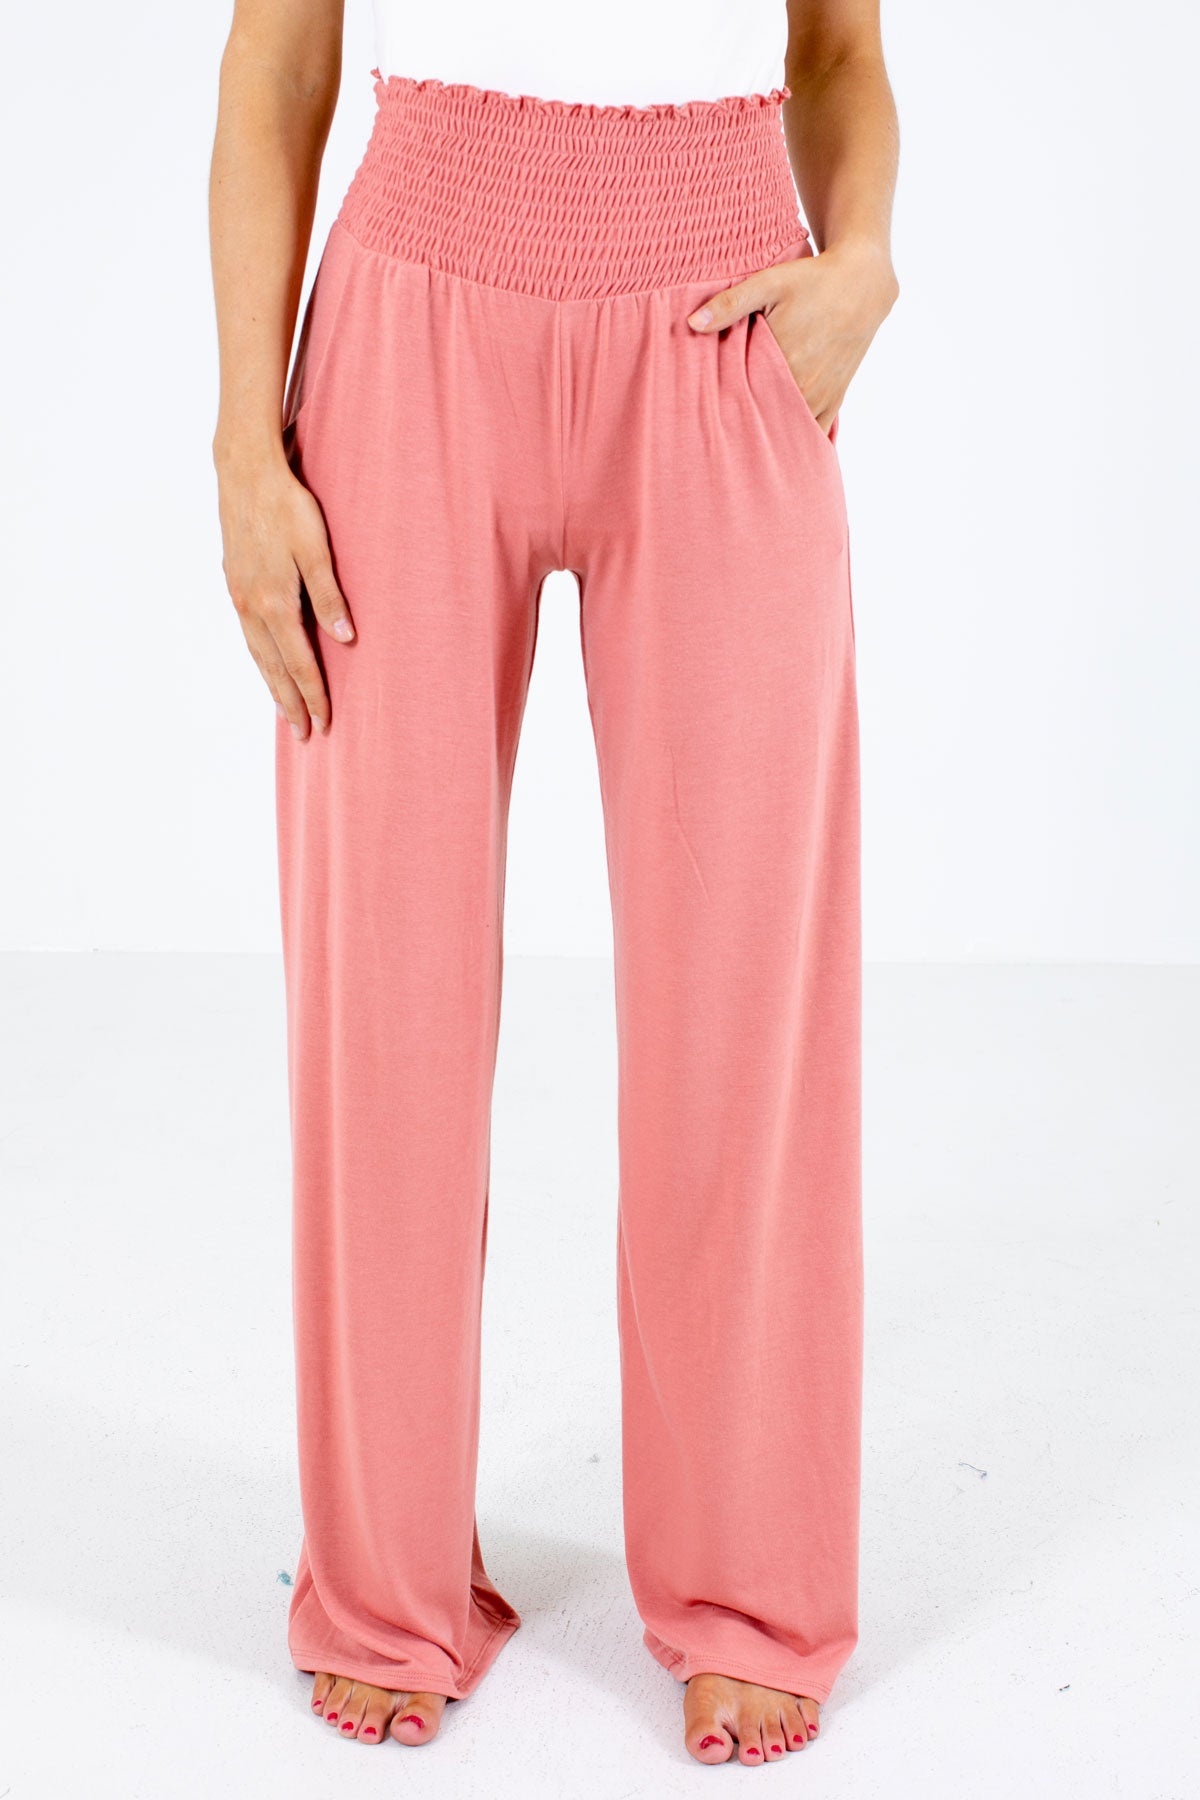 NWT SHOSHO Lounge Pants  Clothes design, Pink patterns, Boho lounge